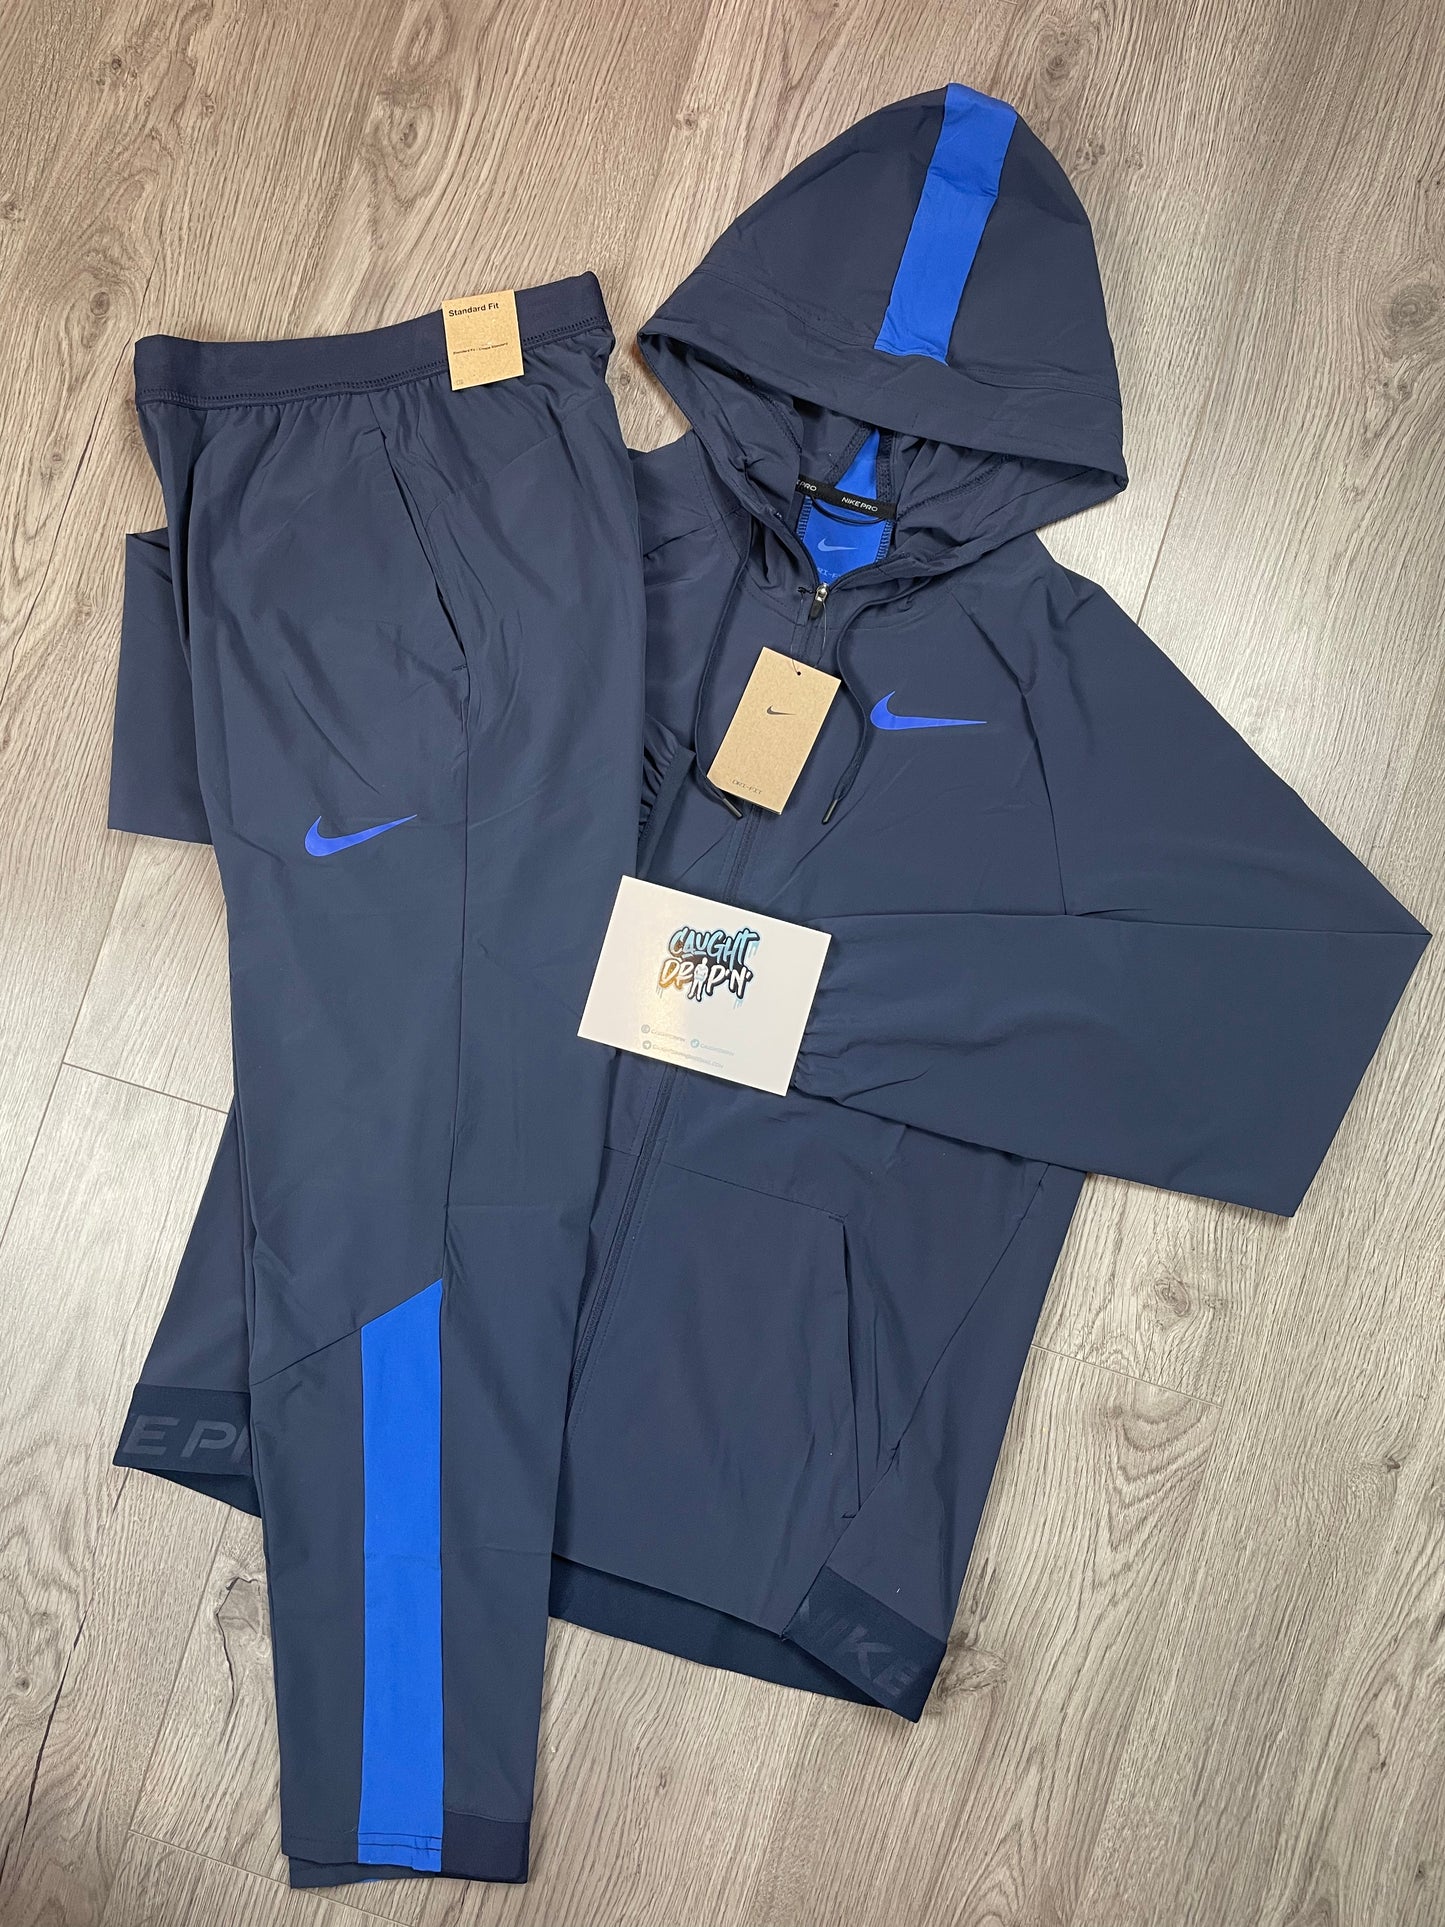 Nike Pro Tracksuit Navy/Royal Blue